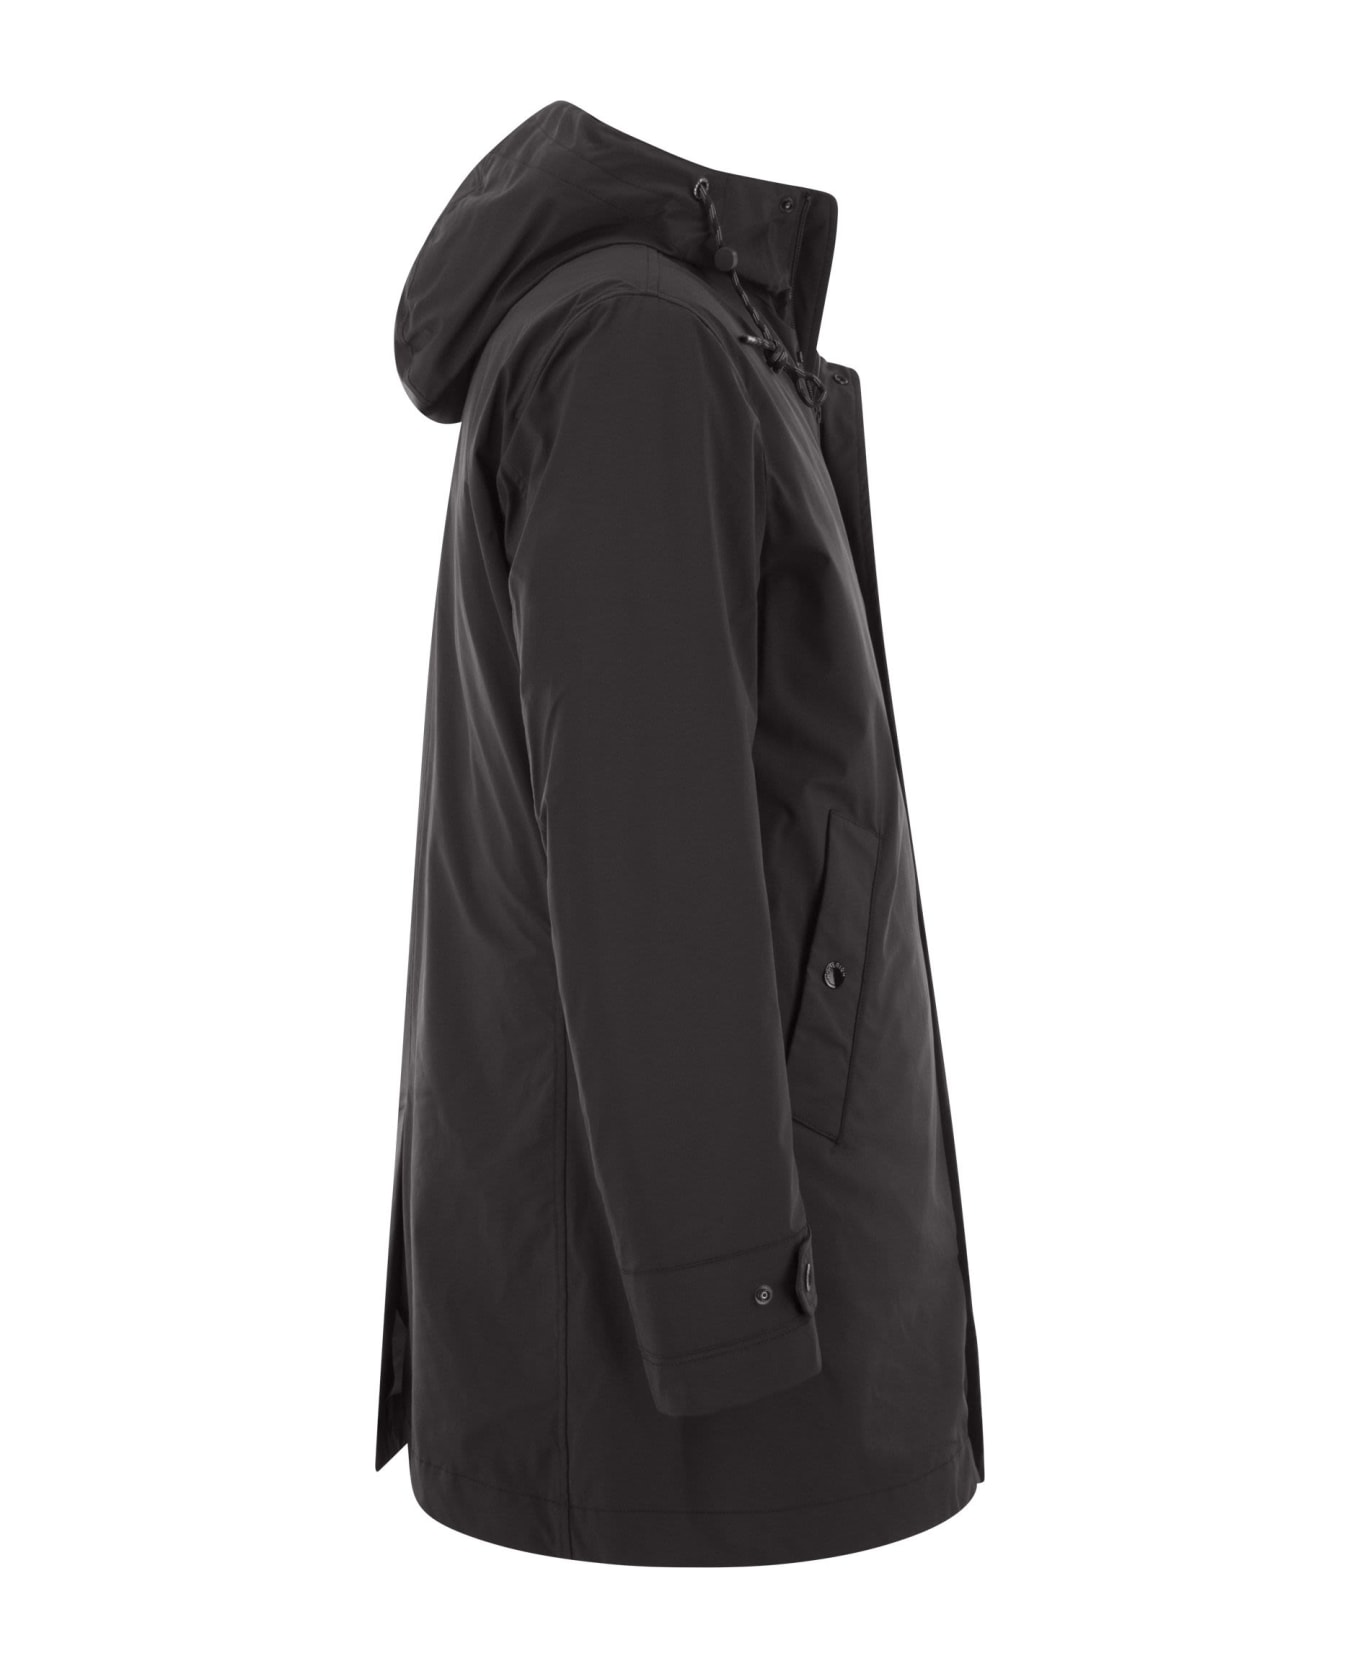 Woolrich 3-in-1 Hooded Jacket - Black